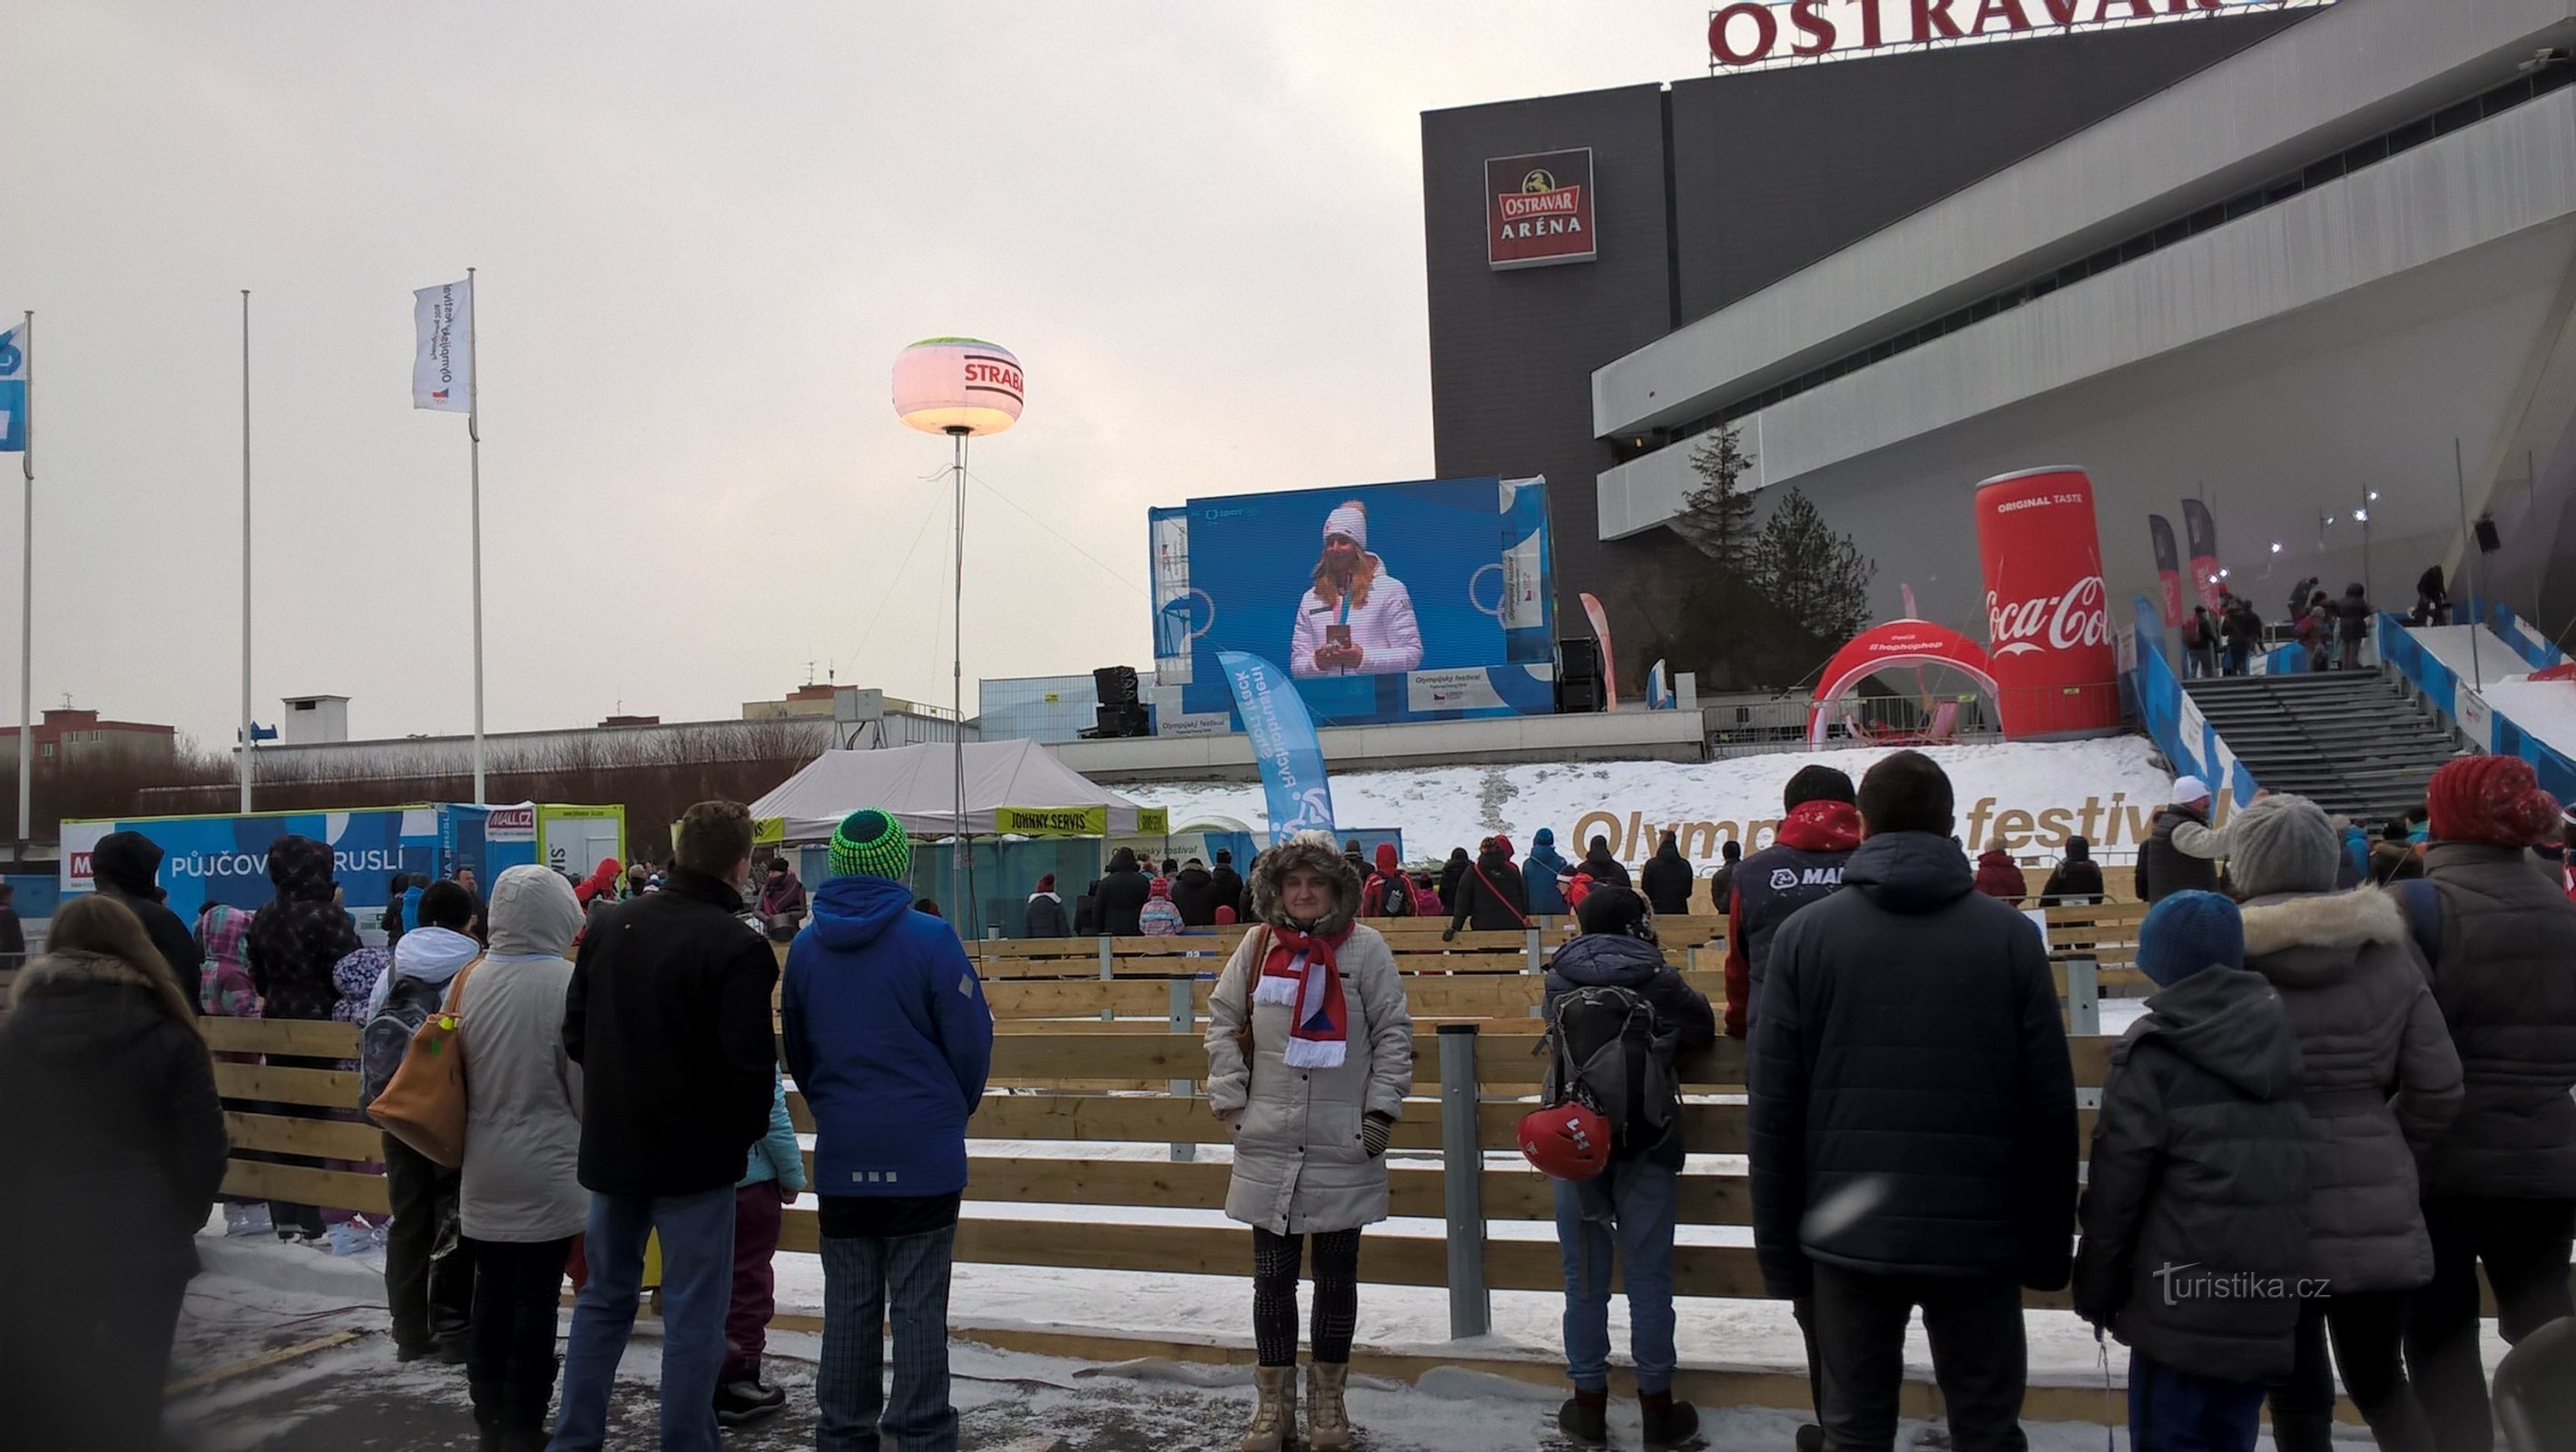 Festiwal Olimpijski Pjongczang 2018 w Ostrawie